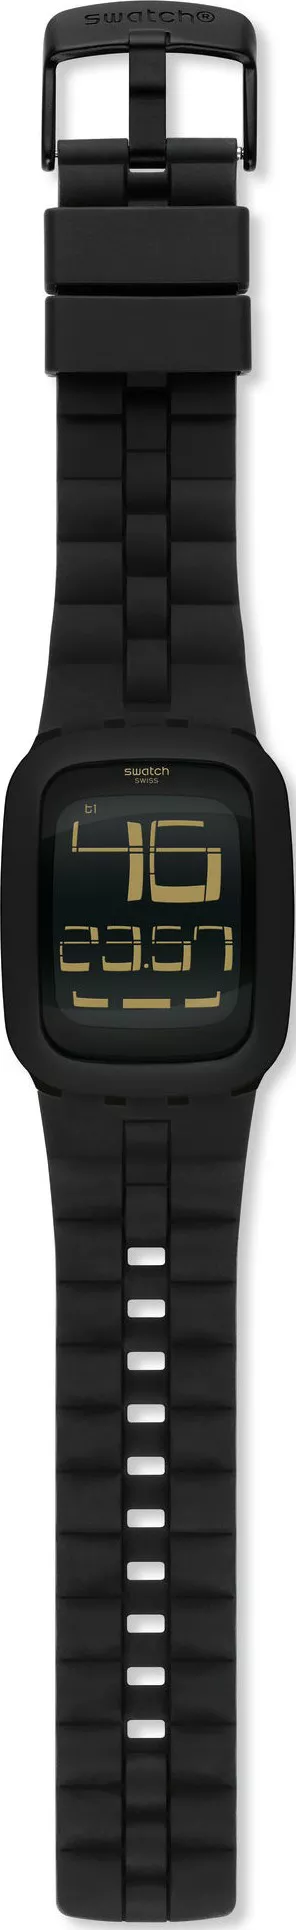  Swatch Bump Digital Silicone Band Unisex Watch, 39mm